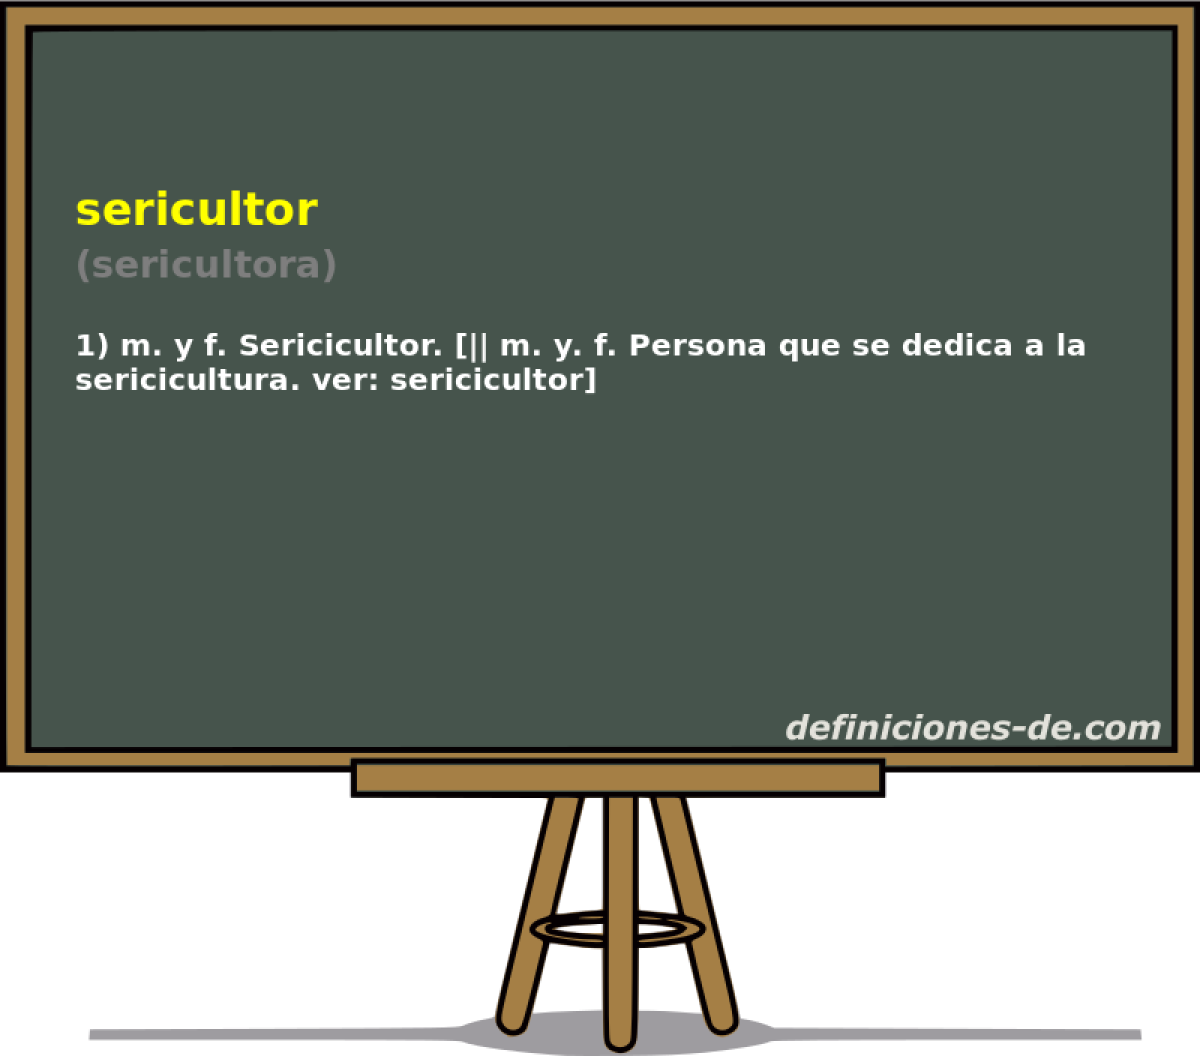 sericultor (sericultora)